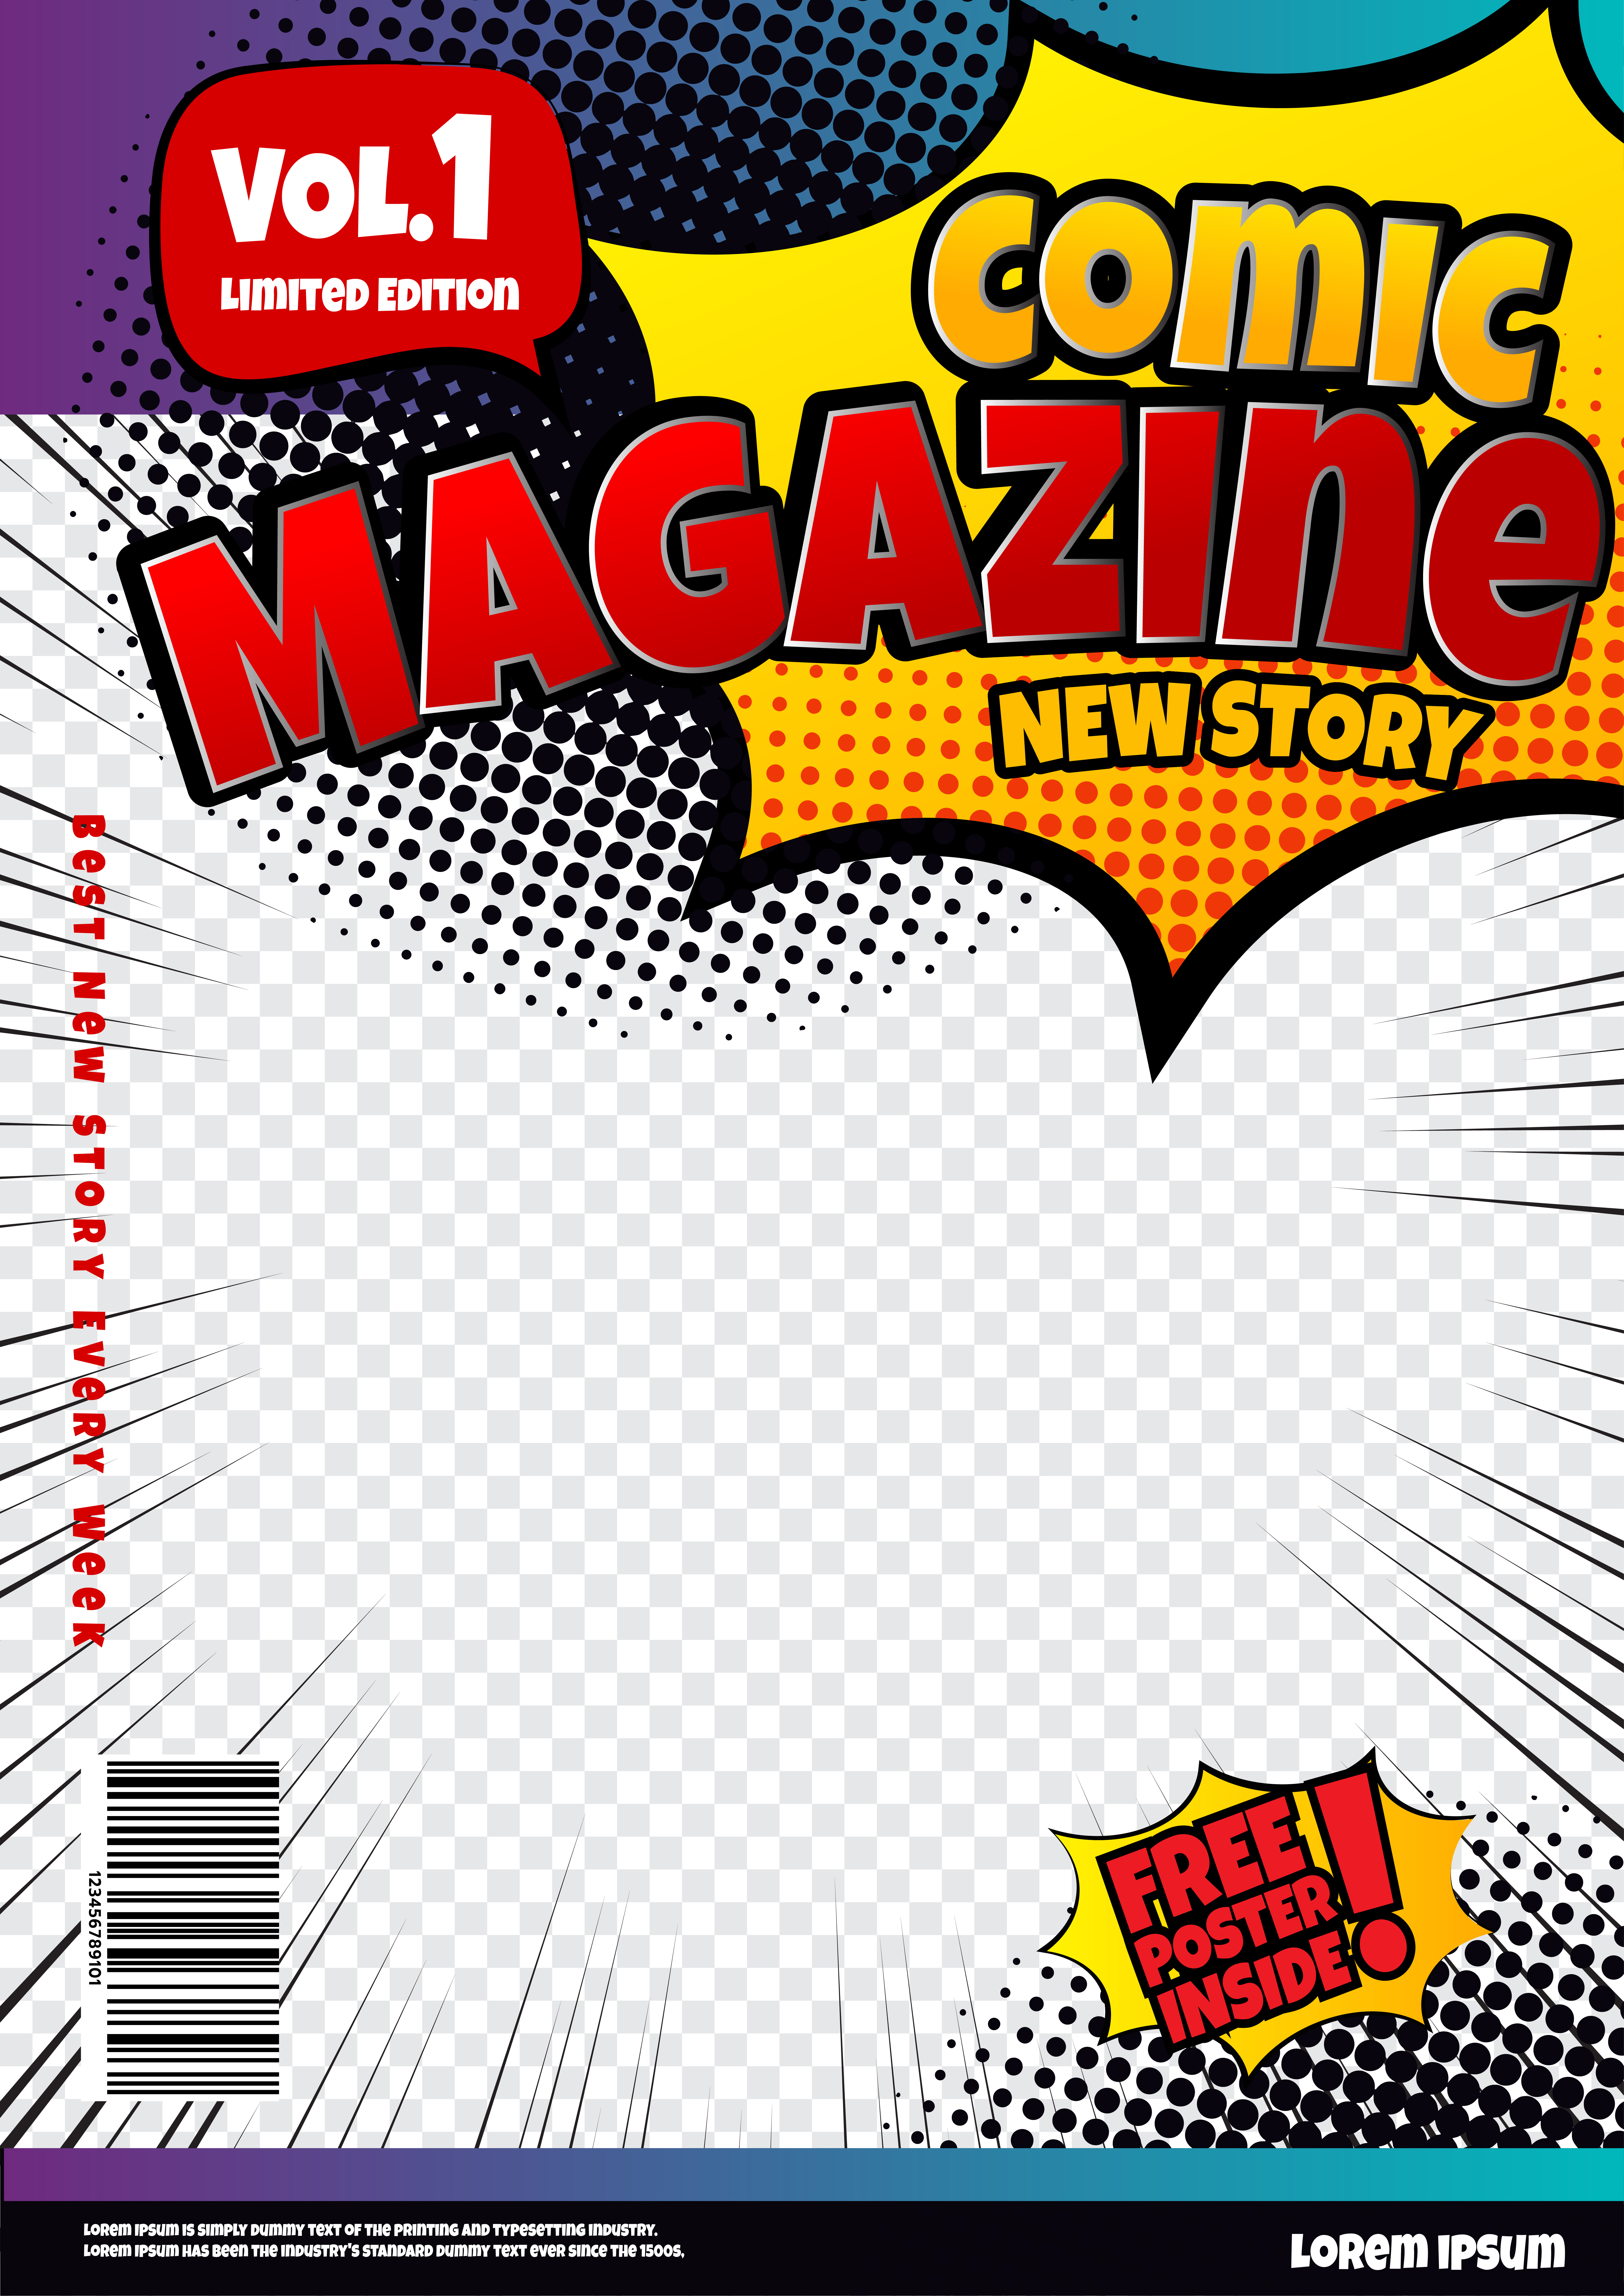 comic book page template design. Magazine cover - Download ...